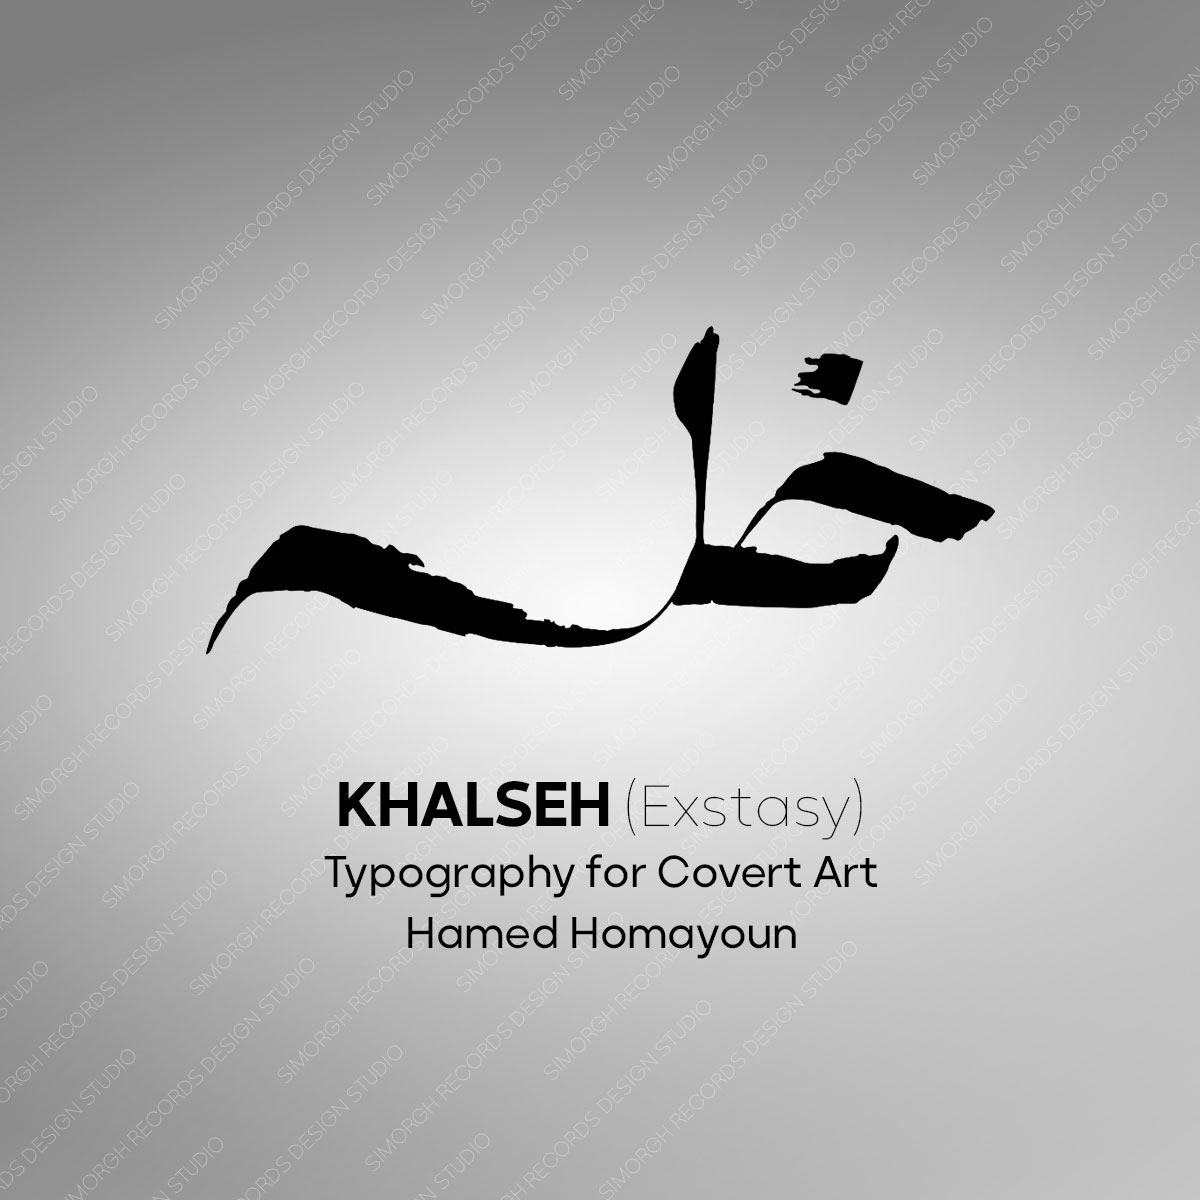 Khalseh-Typography